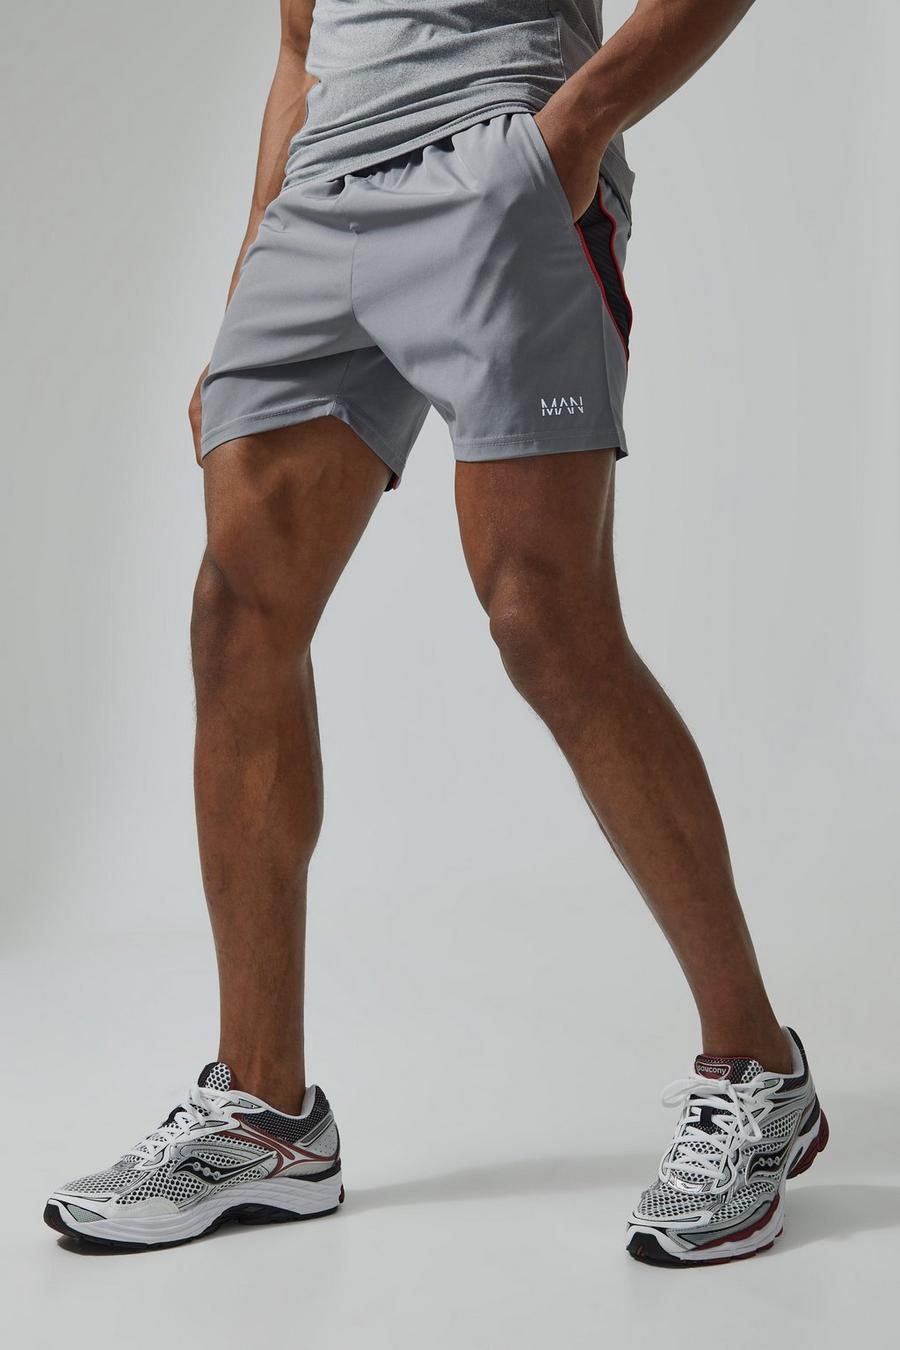 Man Active strukturierte Colorblock Mesh-Shorts, Light grey